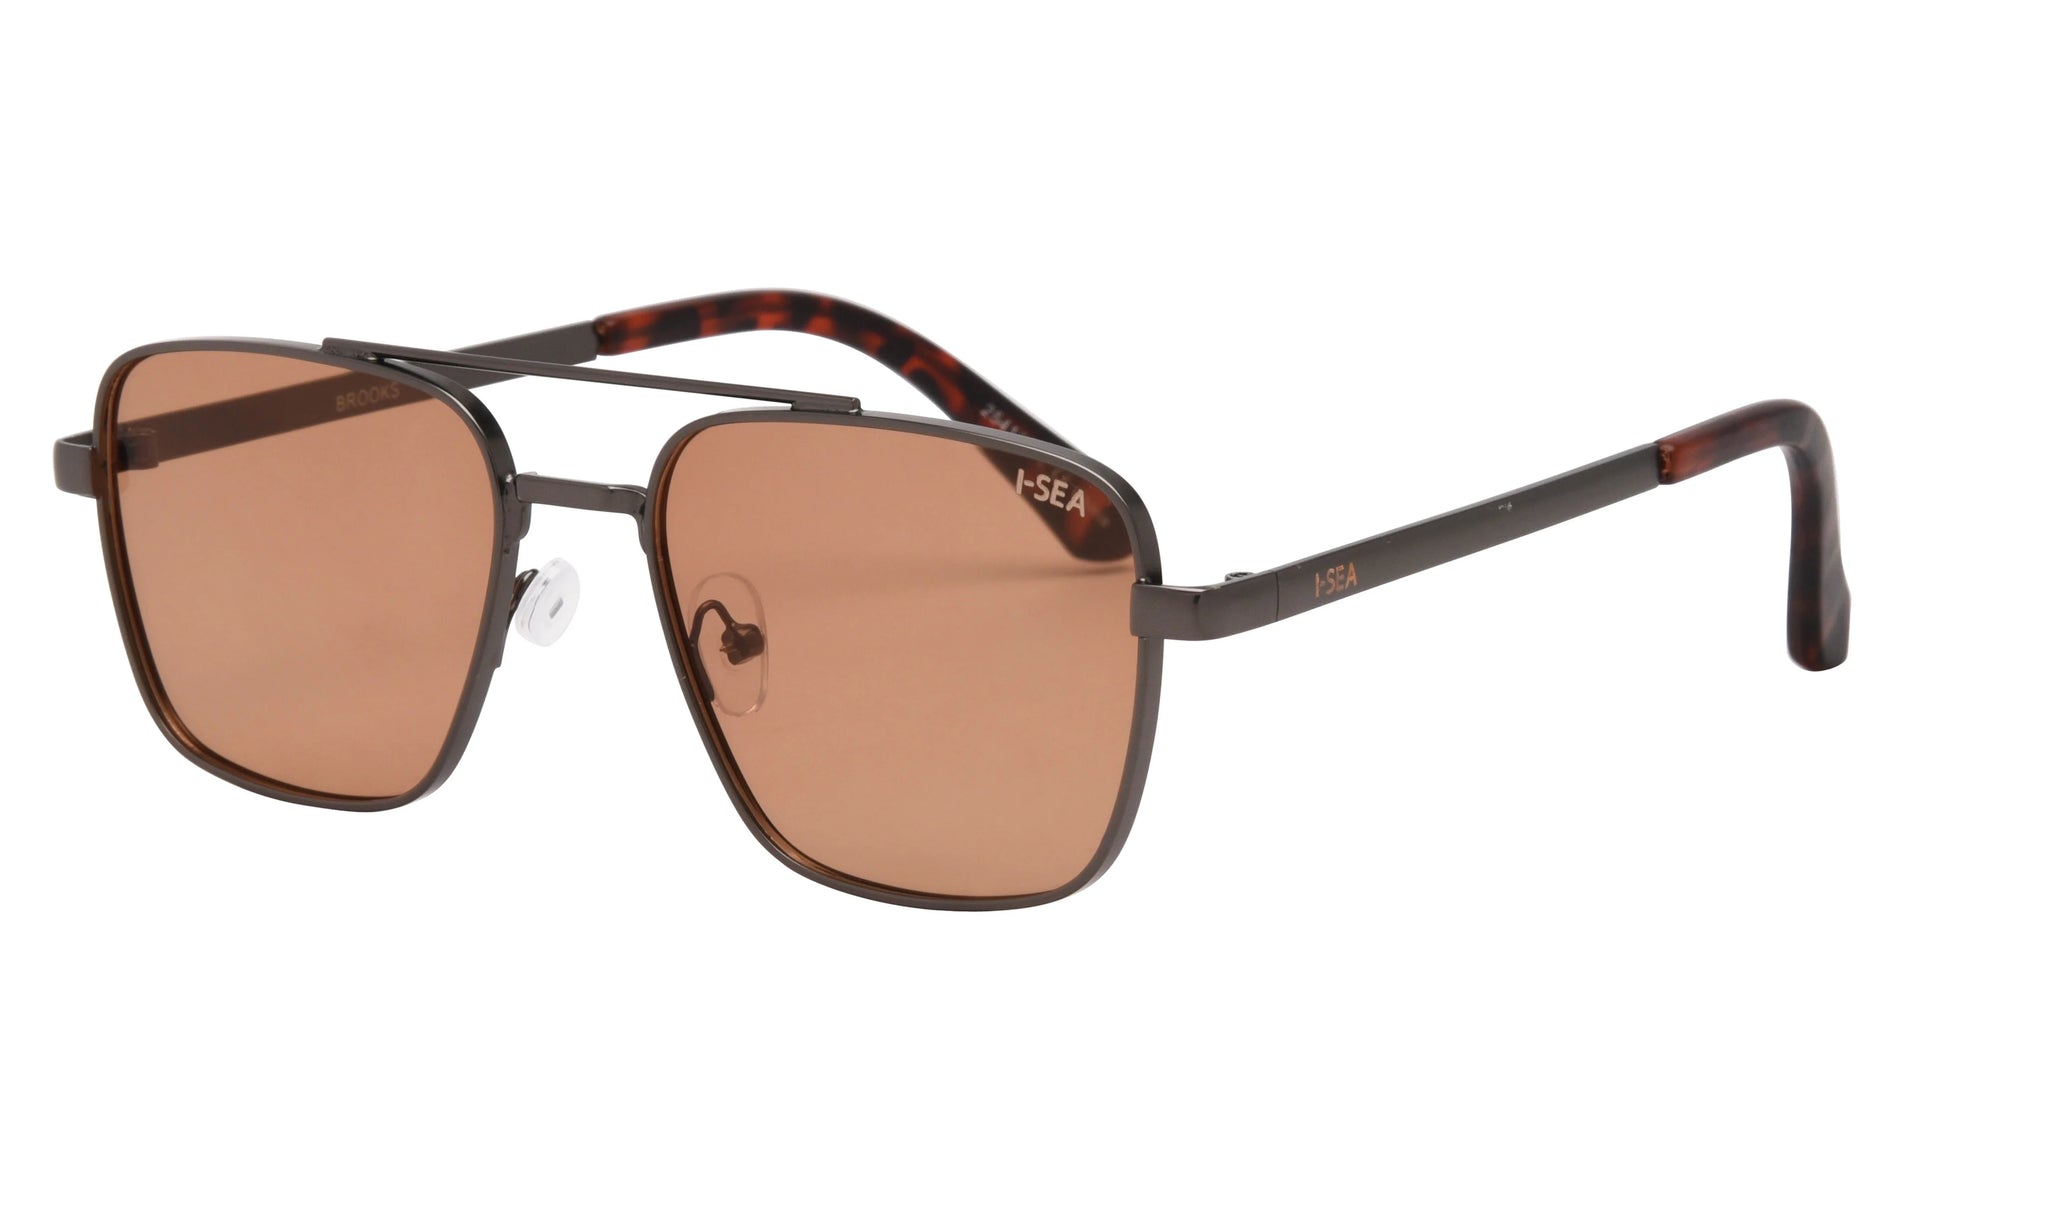 Brooks Gunmetal/Amber Polarized Sunglasses by I-Sea